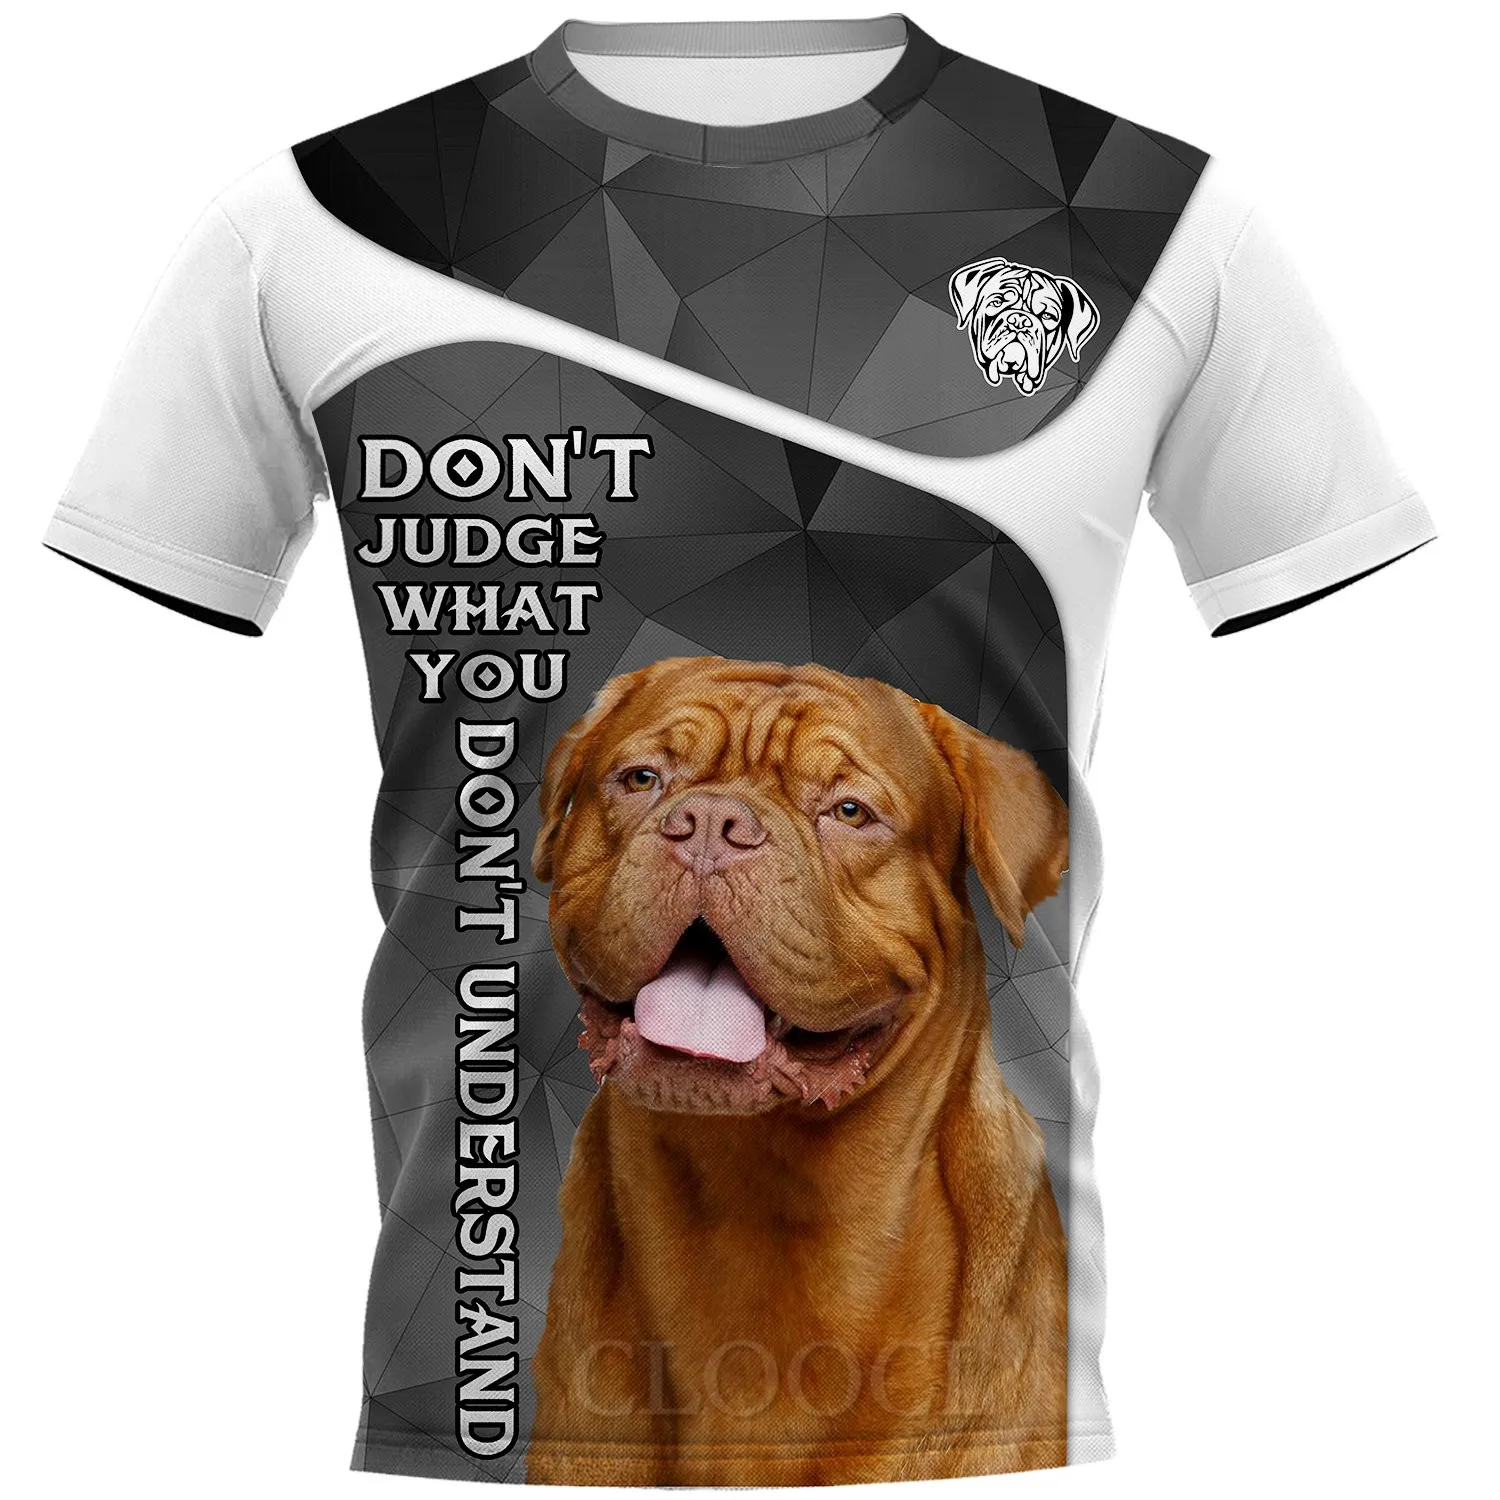 

CLOOCL Animals T-shirts 3D Graphic Don't Judge Dogue de Bordeaux Pullovers Pets Dog Casual Sweatshirts Harajuku Men Clothing